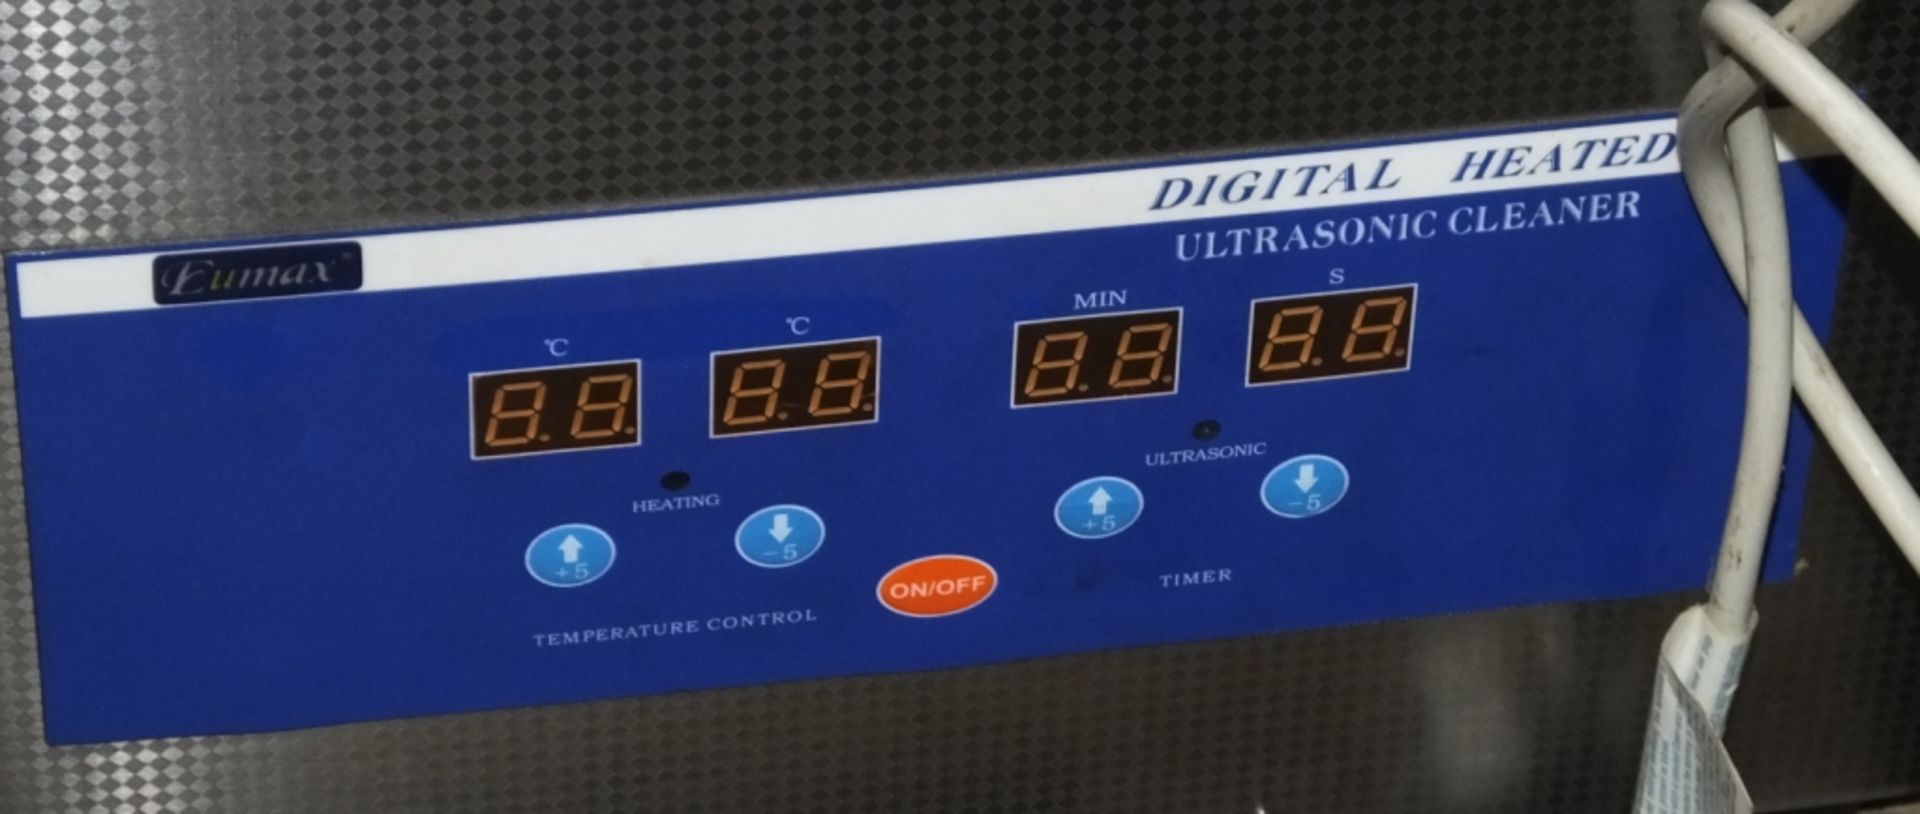 Eumax Digital Ultrasonic Cleaning Bath - UD500H-15L - Image 2 of 5